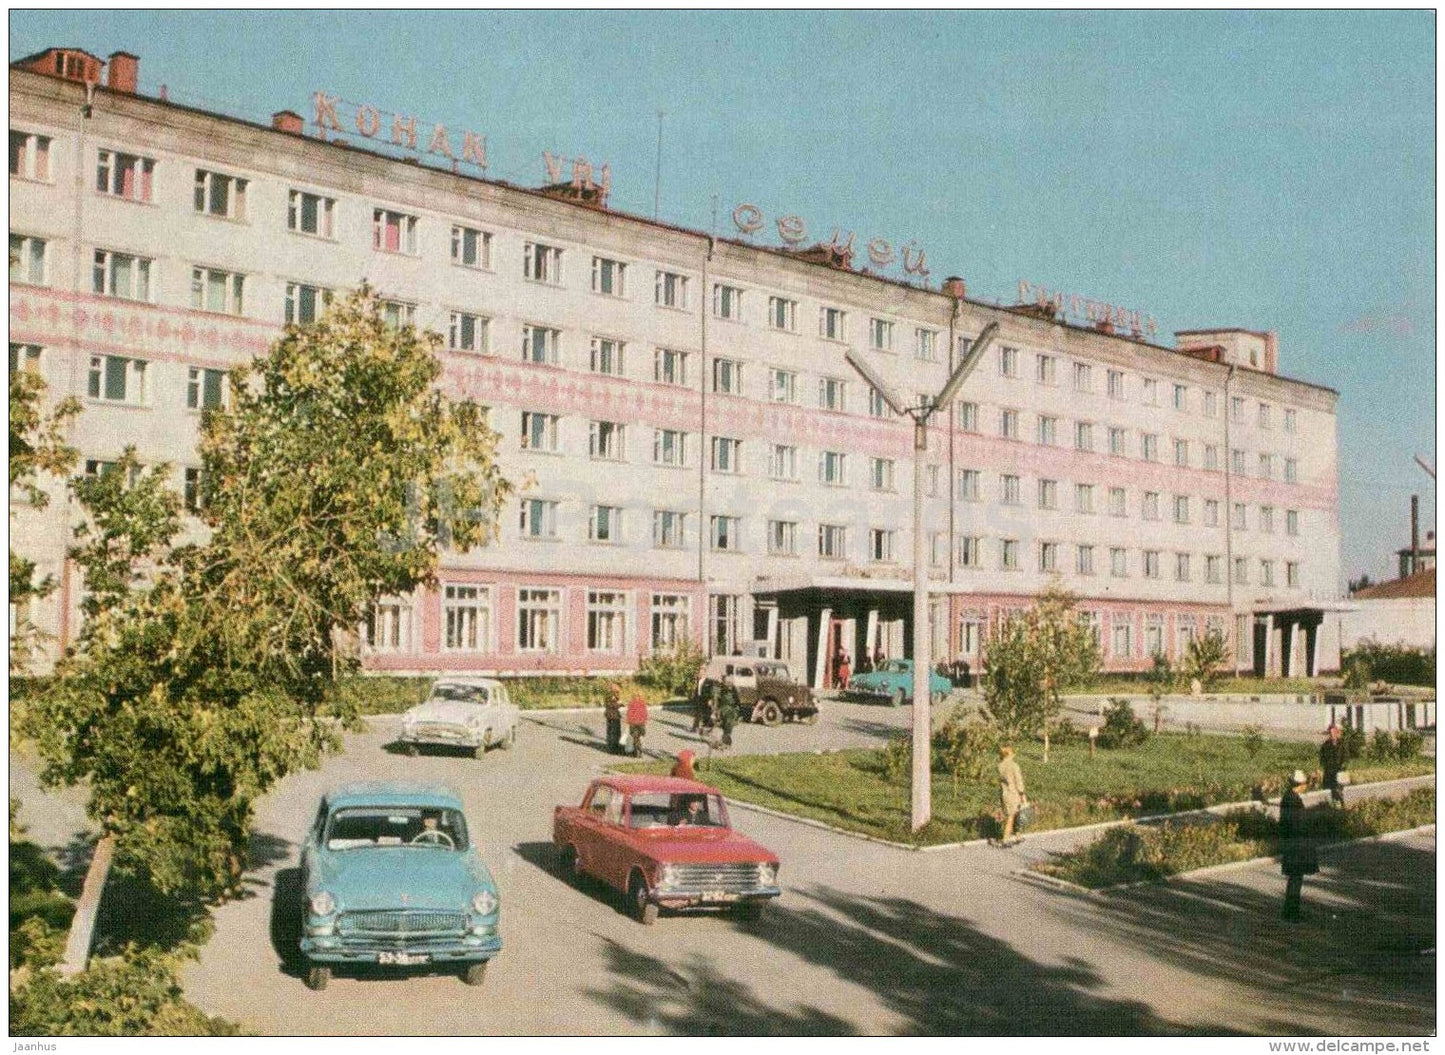 hotel Semipalatinsk - car Moskvitch , Volga - Semipalatinsk - Semey - postal stationery 1972 - Kazakhstan USSR - unused - JH Postcards